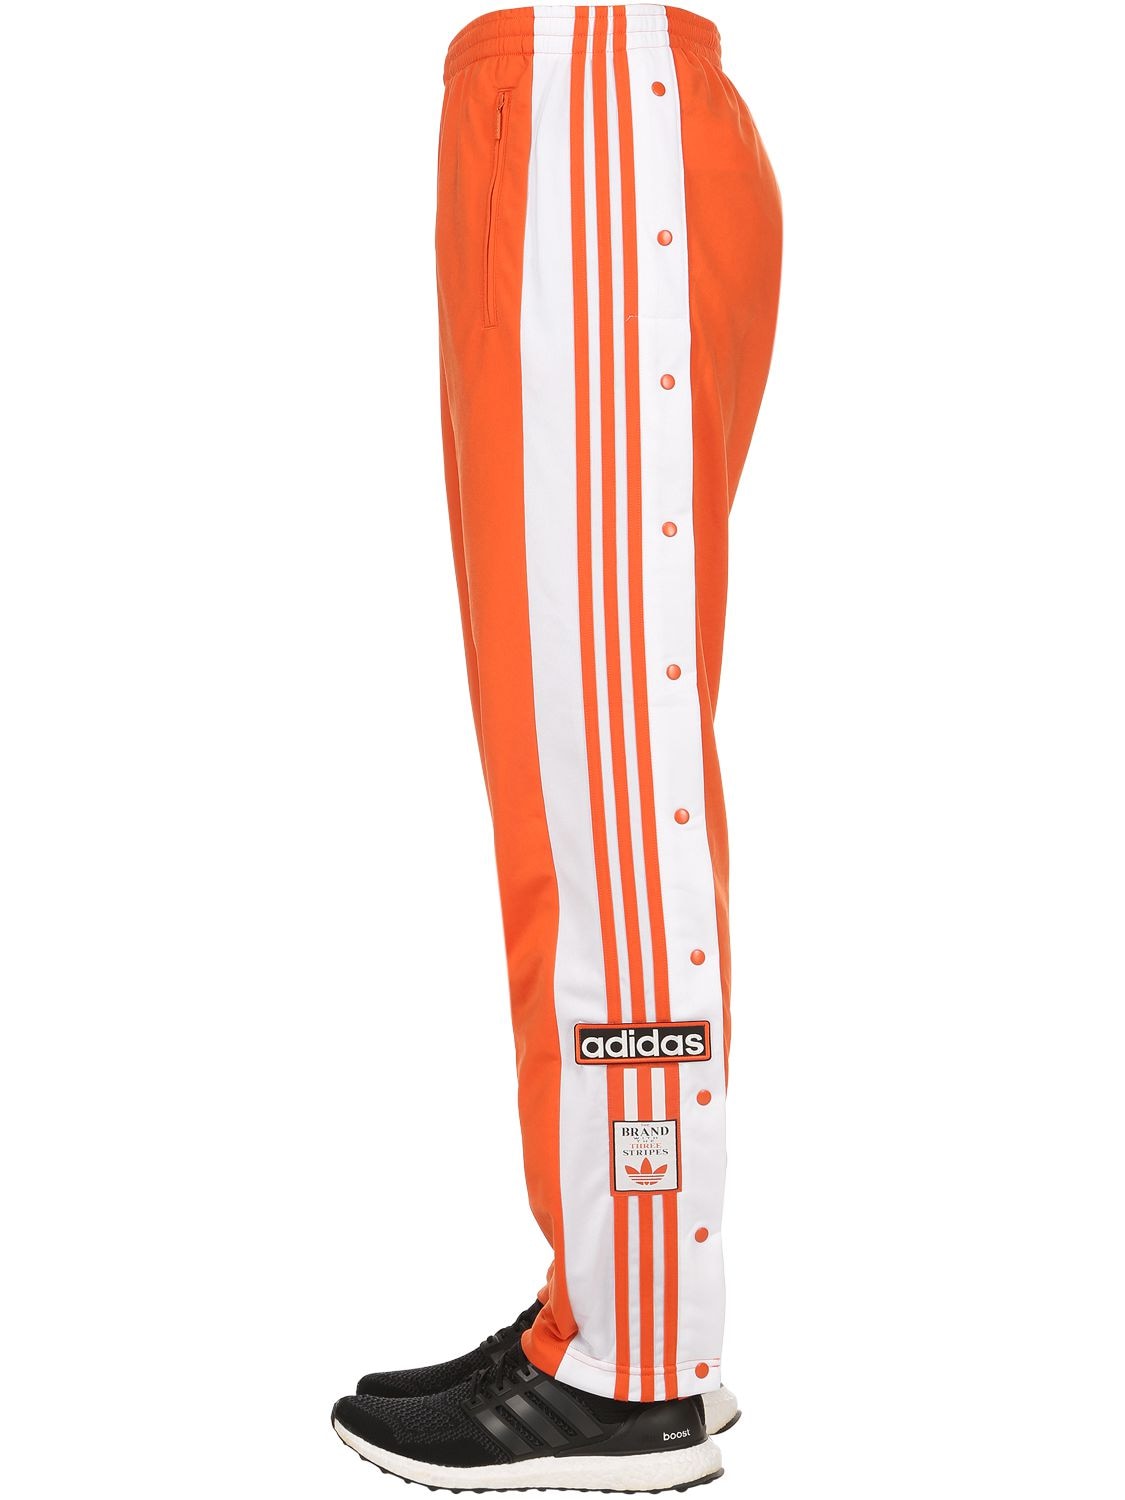 adibreak track pants orange